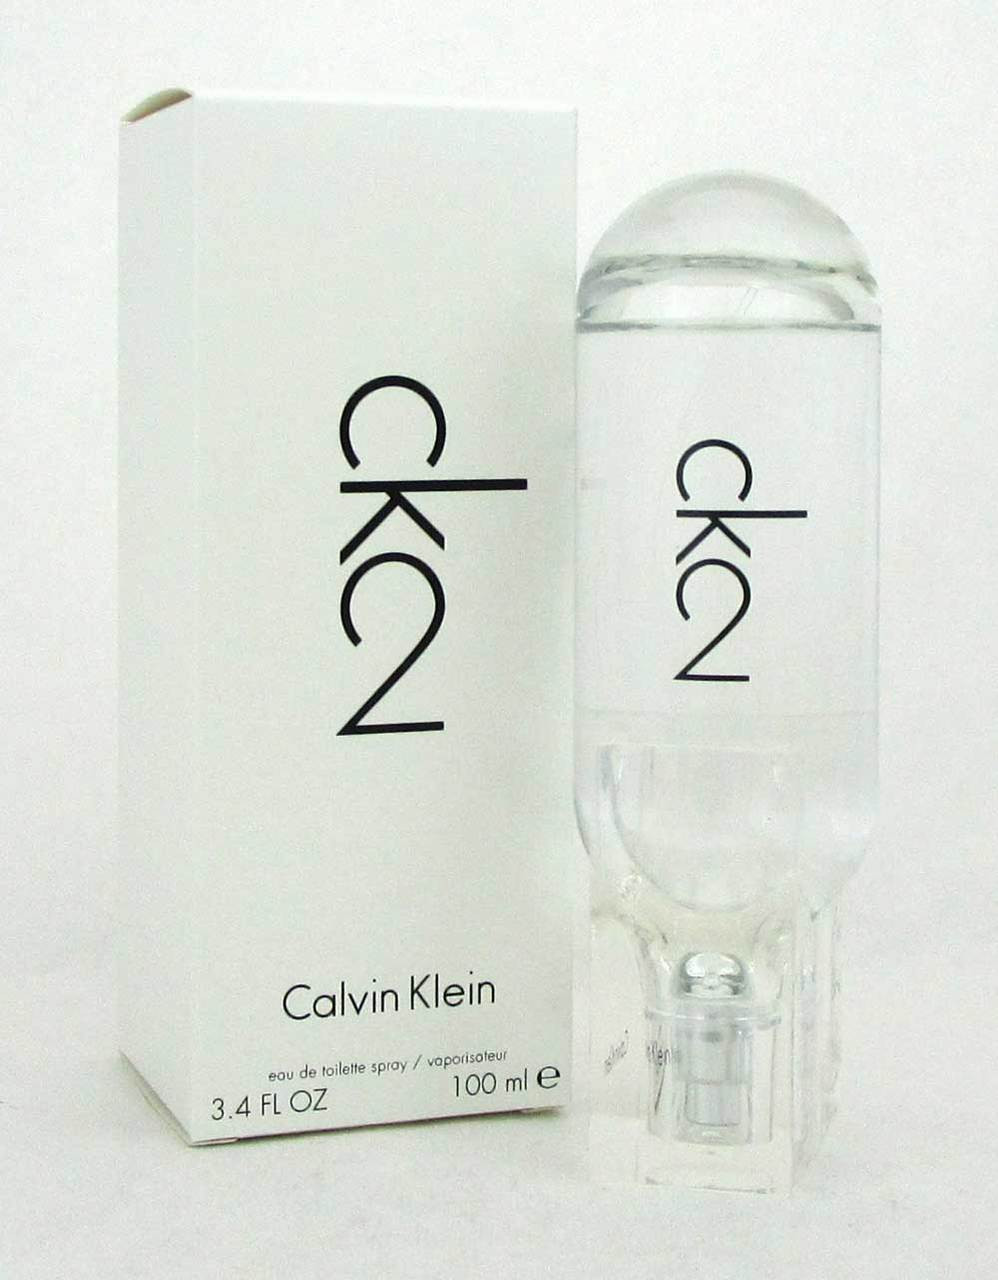 CK2 by Calvin Klein Eau de Toilette Spray 3.4oz/100ml Unisex *Tester -  NotJustPerfume.com